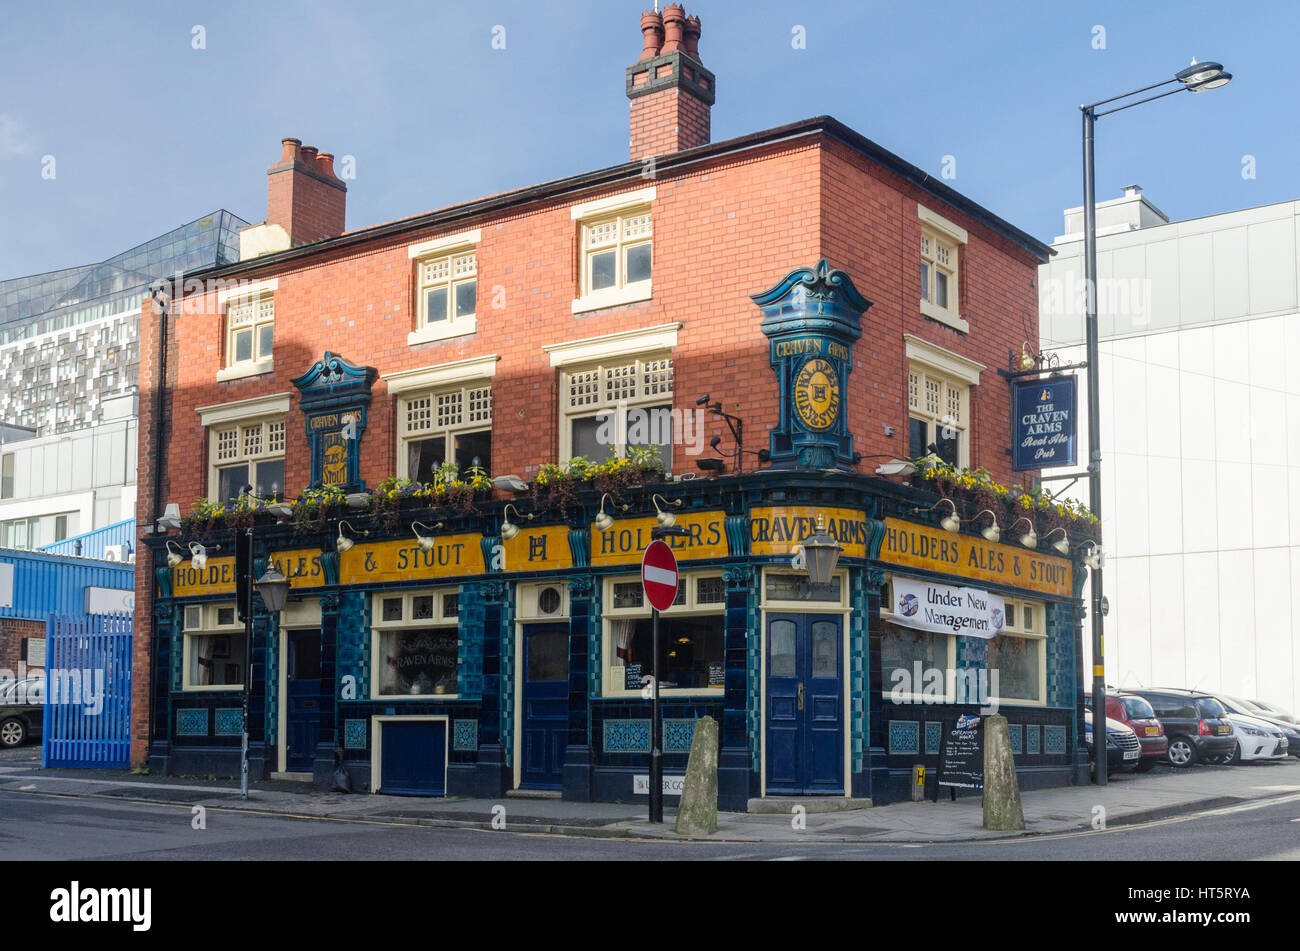 The Craven Arms tradition city centre pub in Birmingham Stock Photo